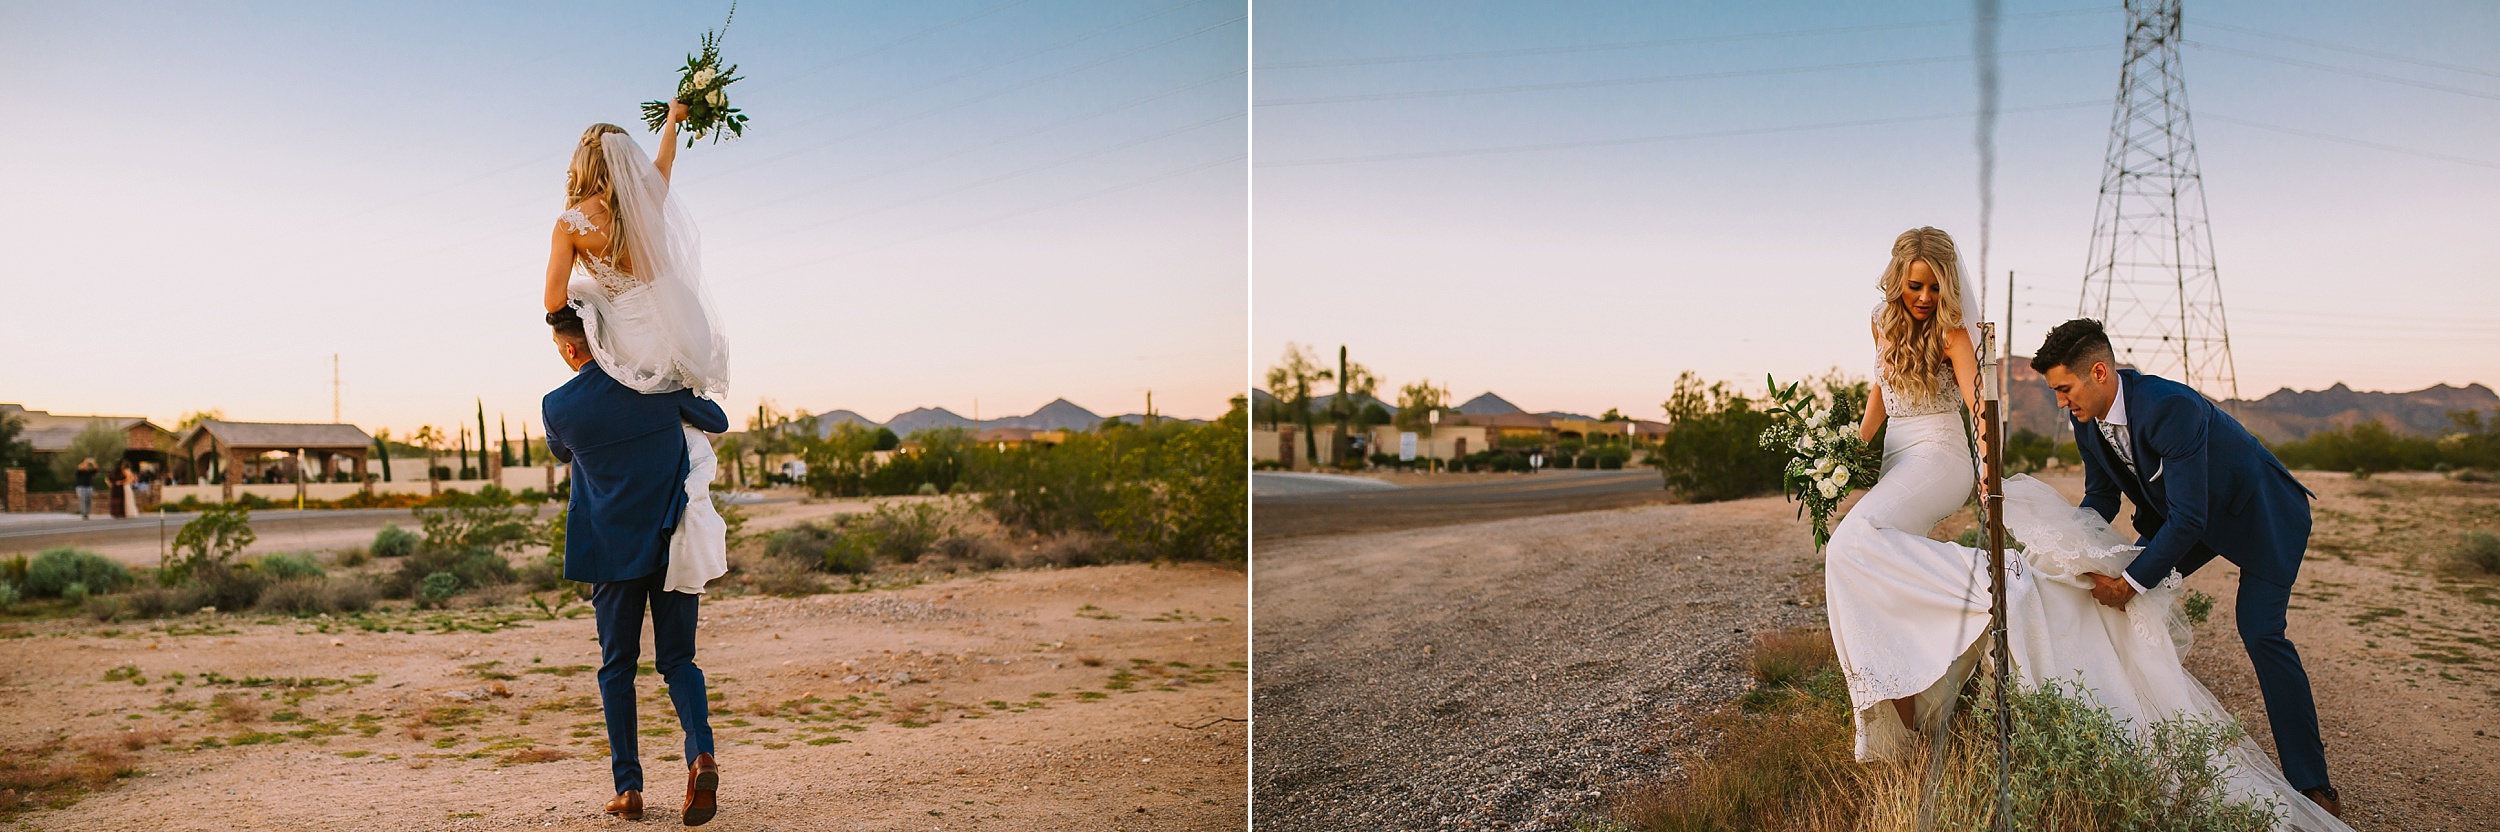 Meg+Bubba_Wedding_Bride+Groom_Portraits_Arizona-251.jpg